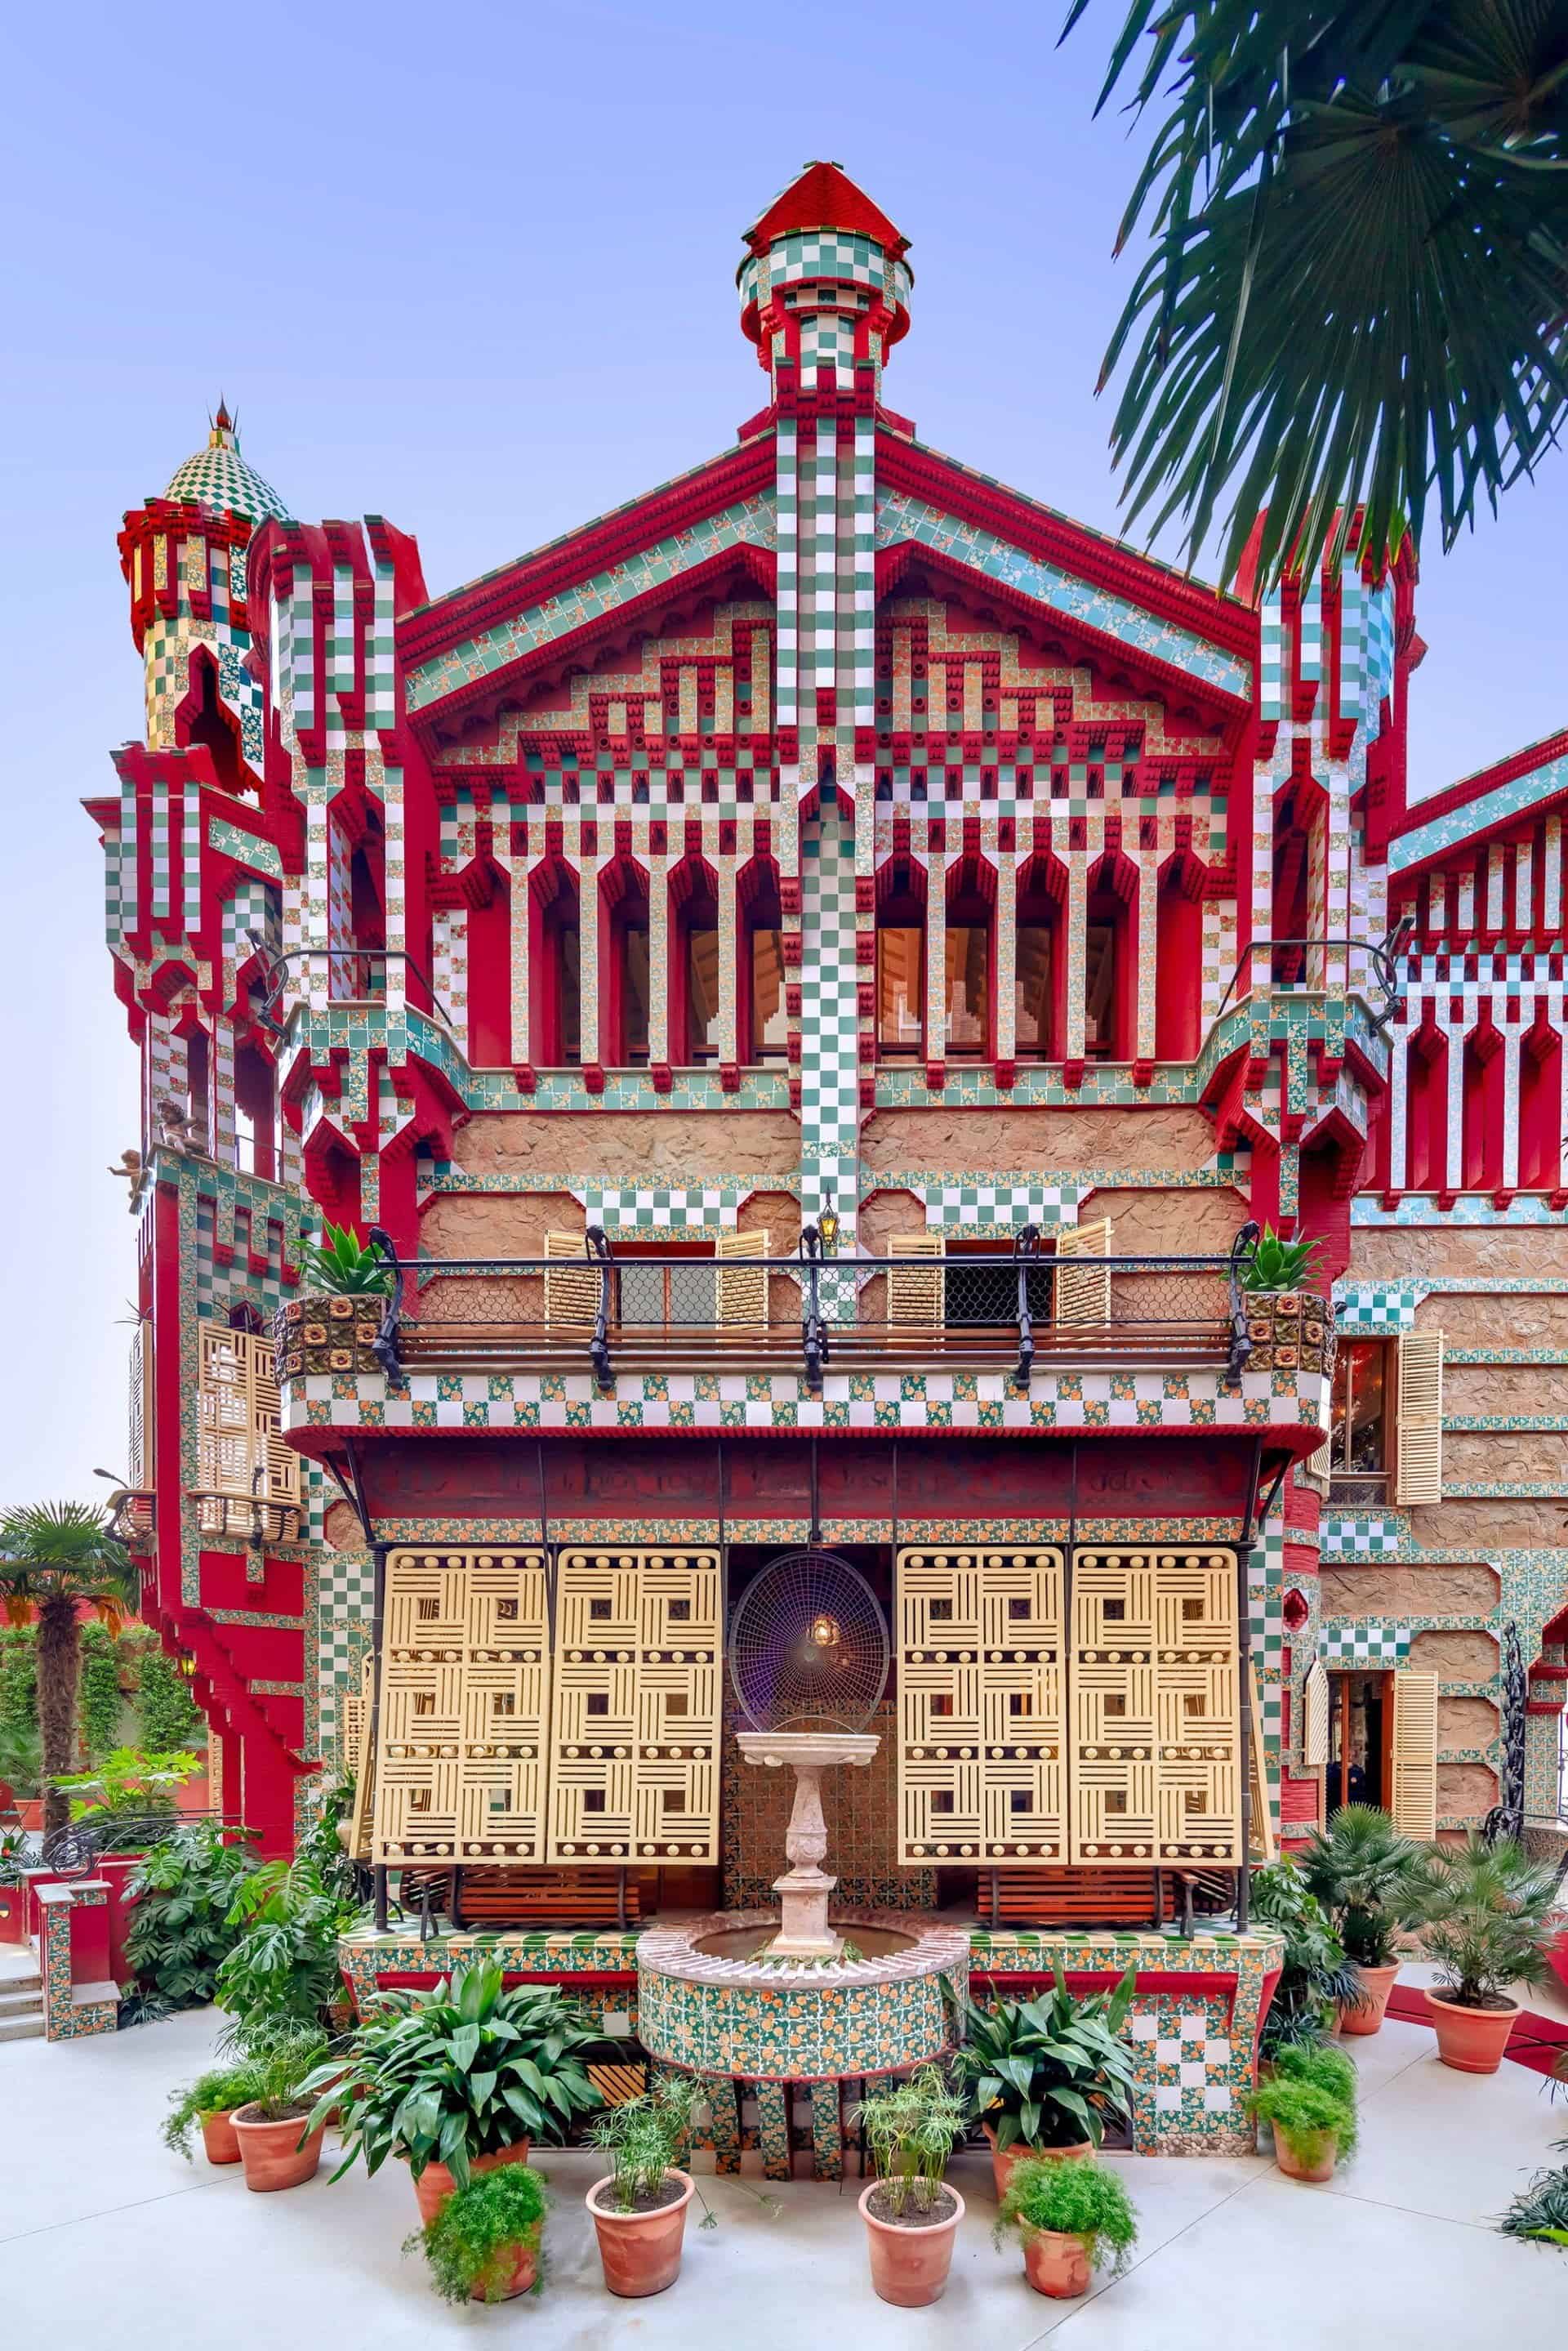 Casa Vicens van Antoni Gaudí